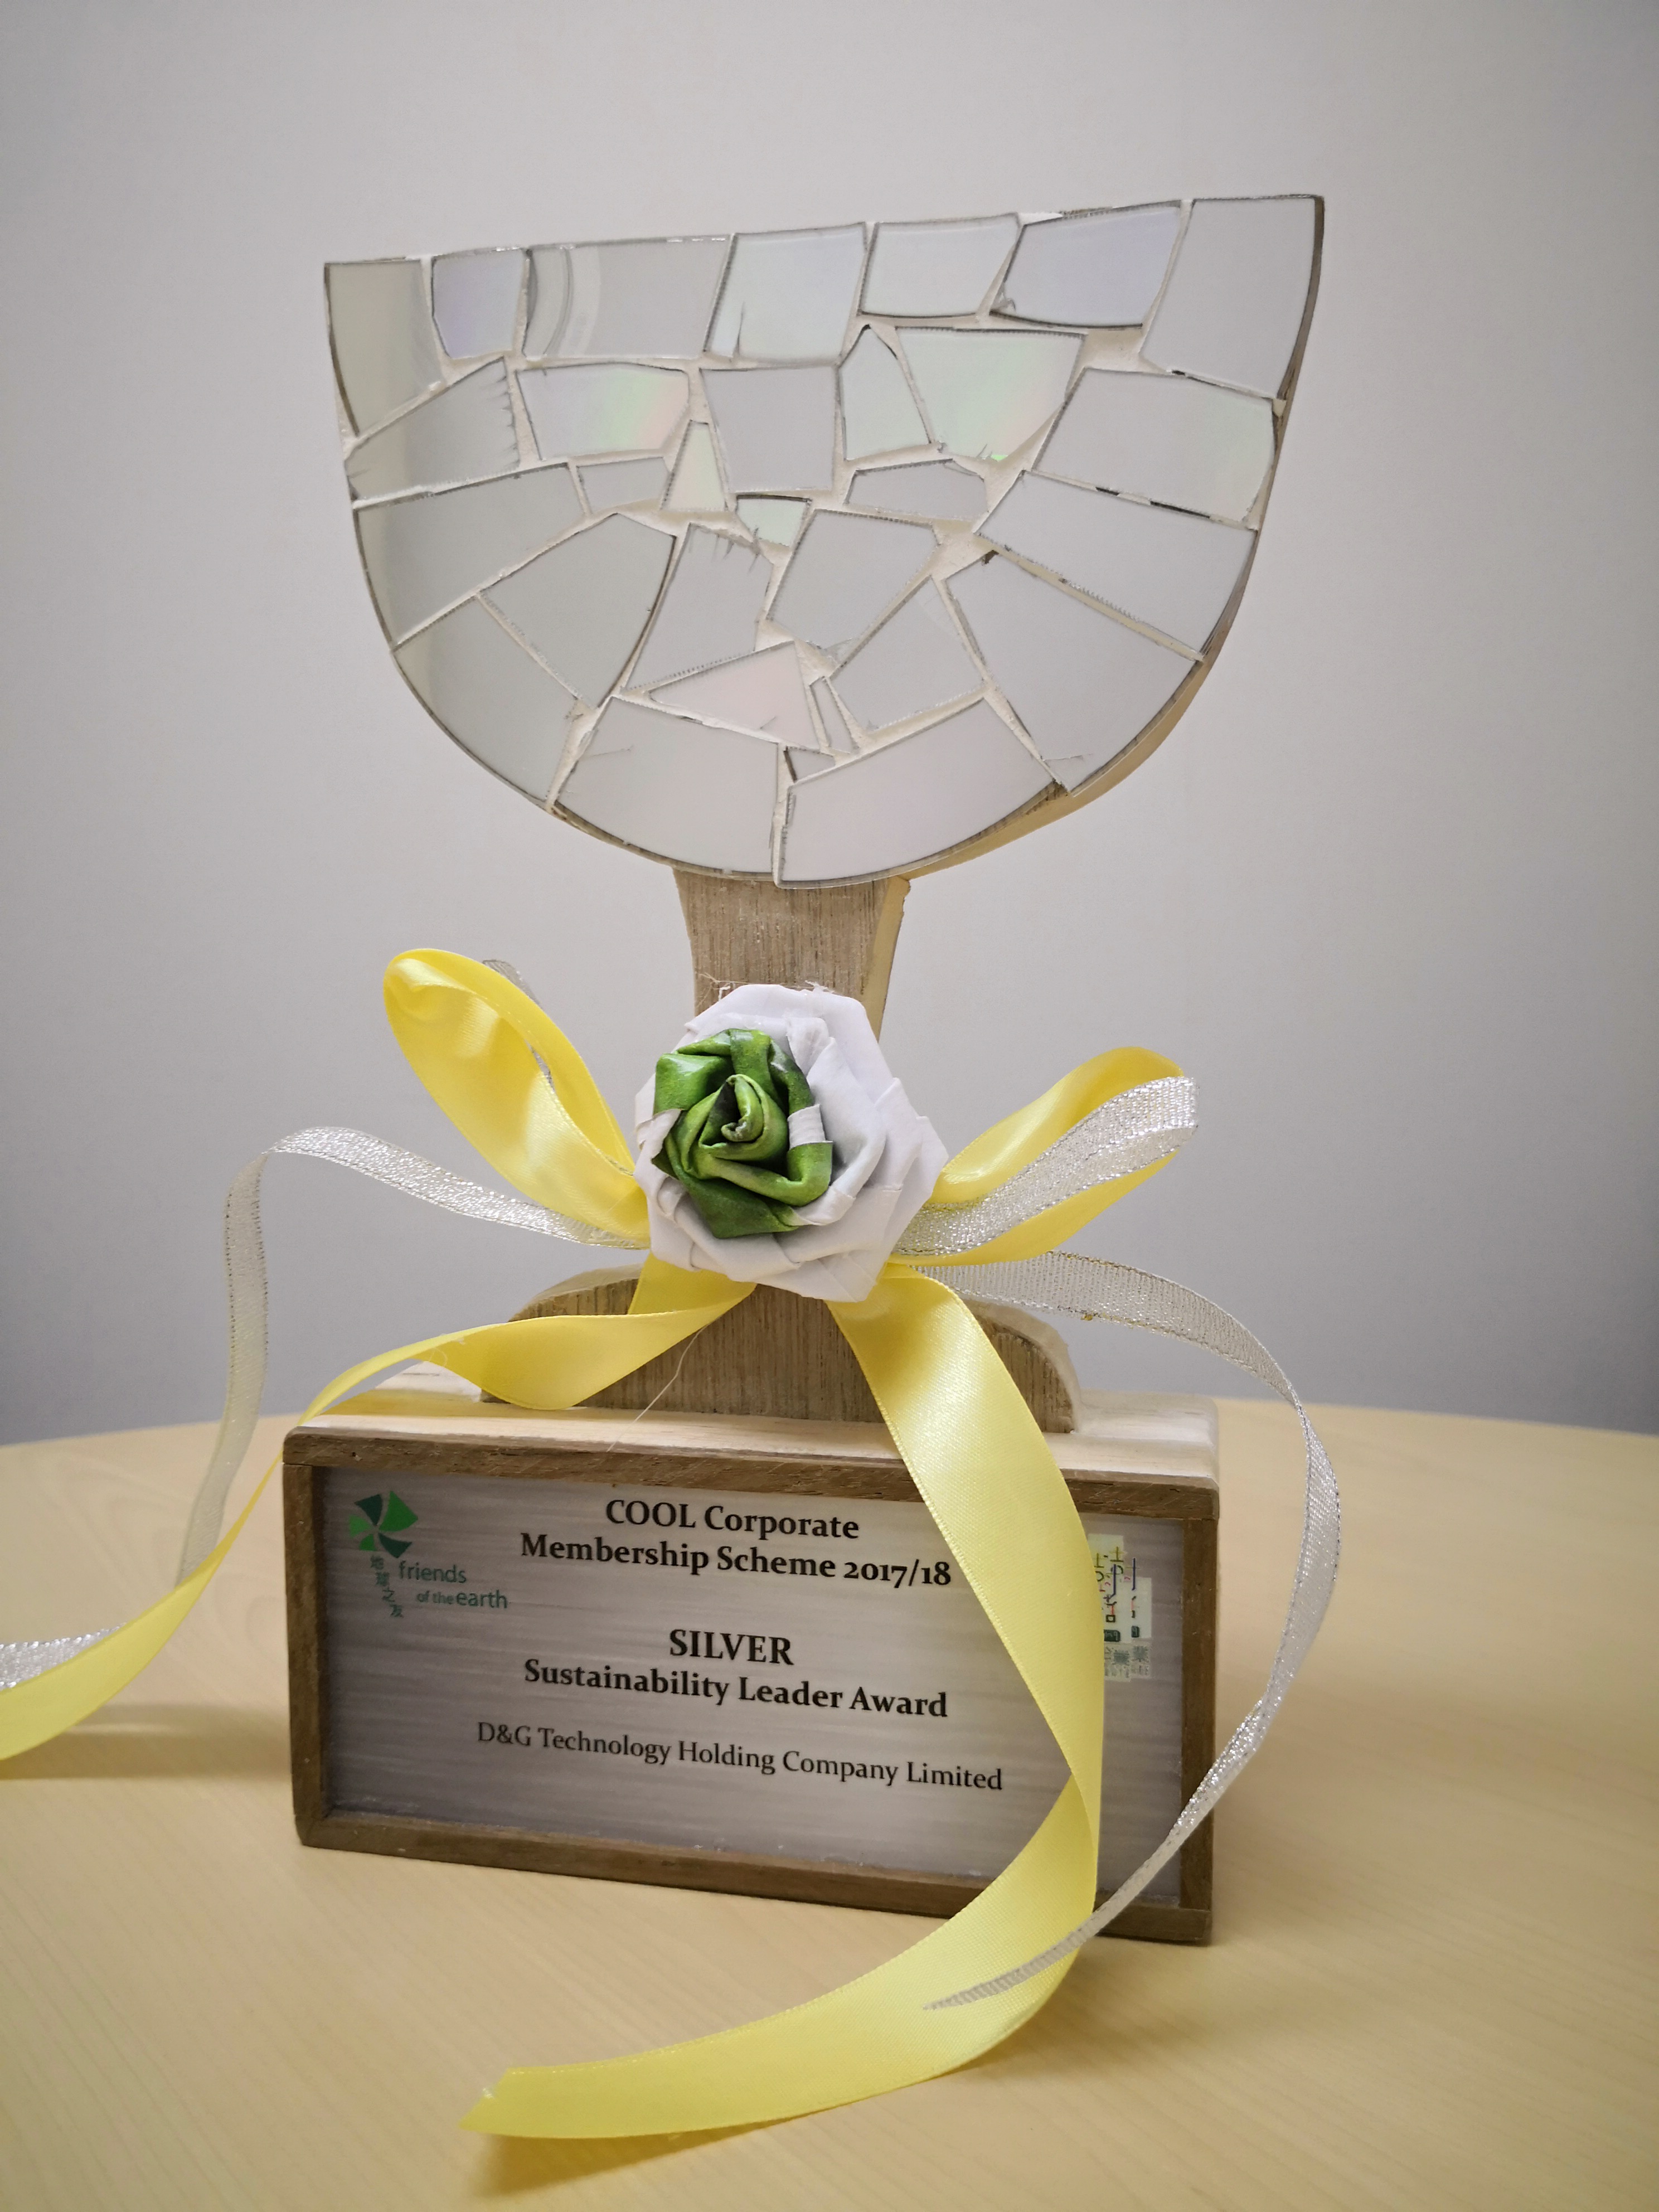 Sustainability Leader Award – Silver